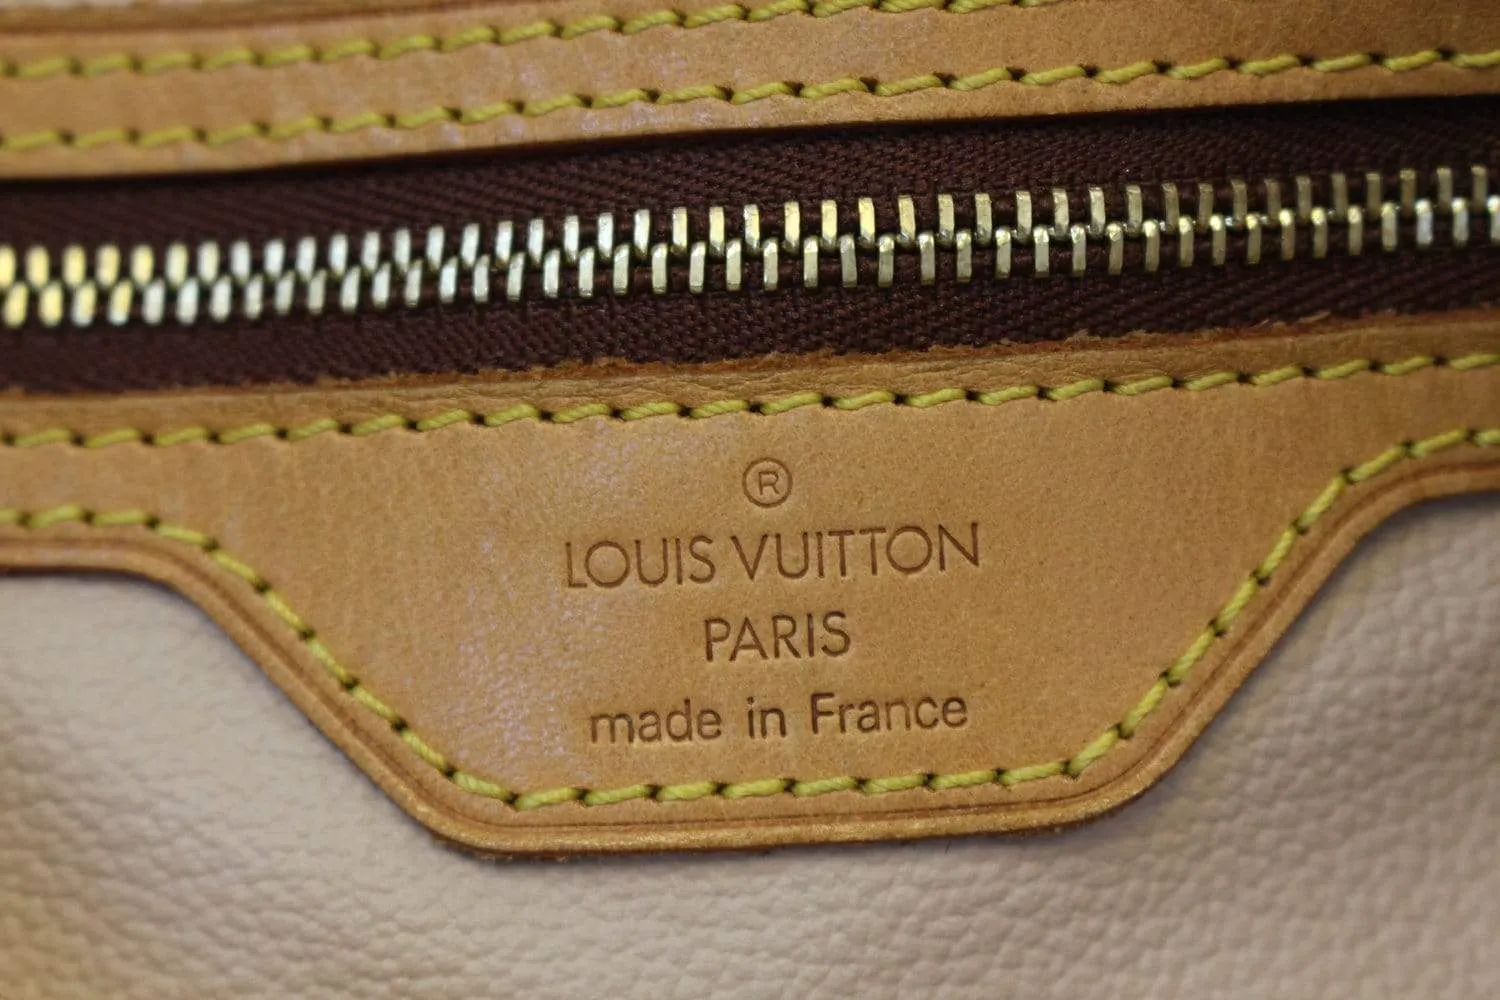 Where should I buy a Louis Vuitton handbag in Paris to get the best deal   Quora